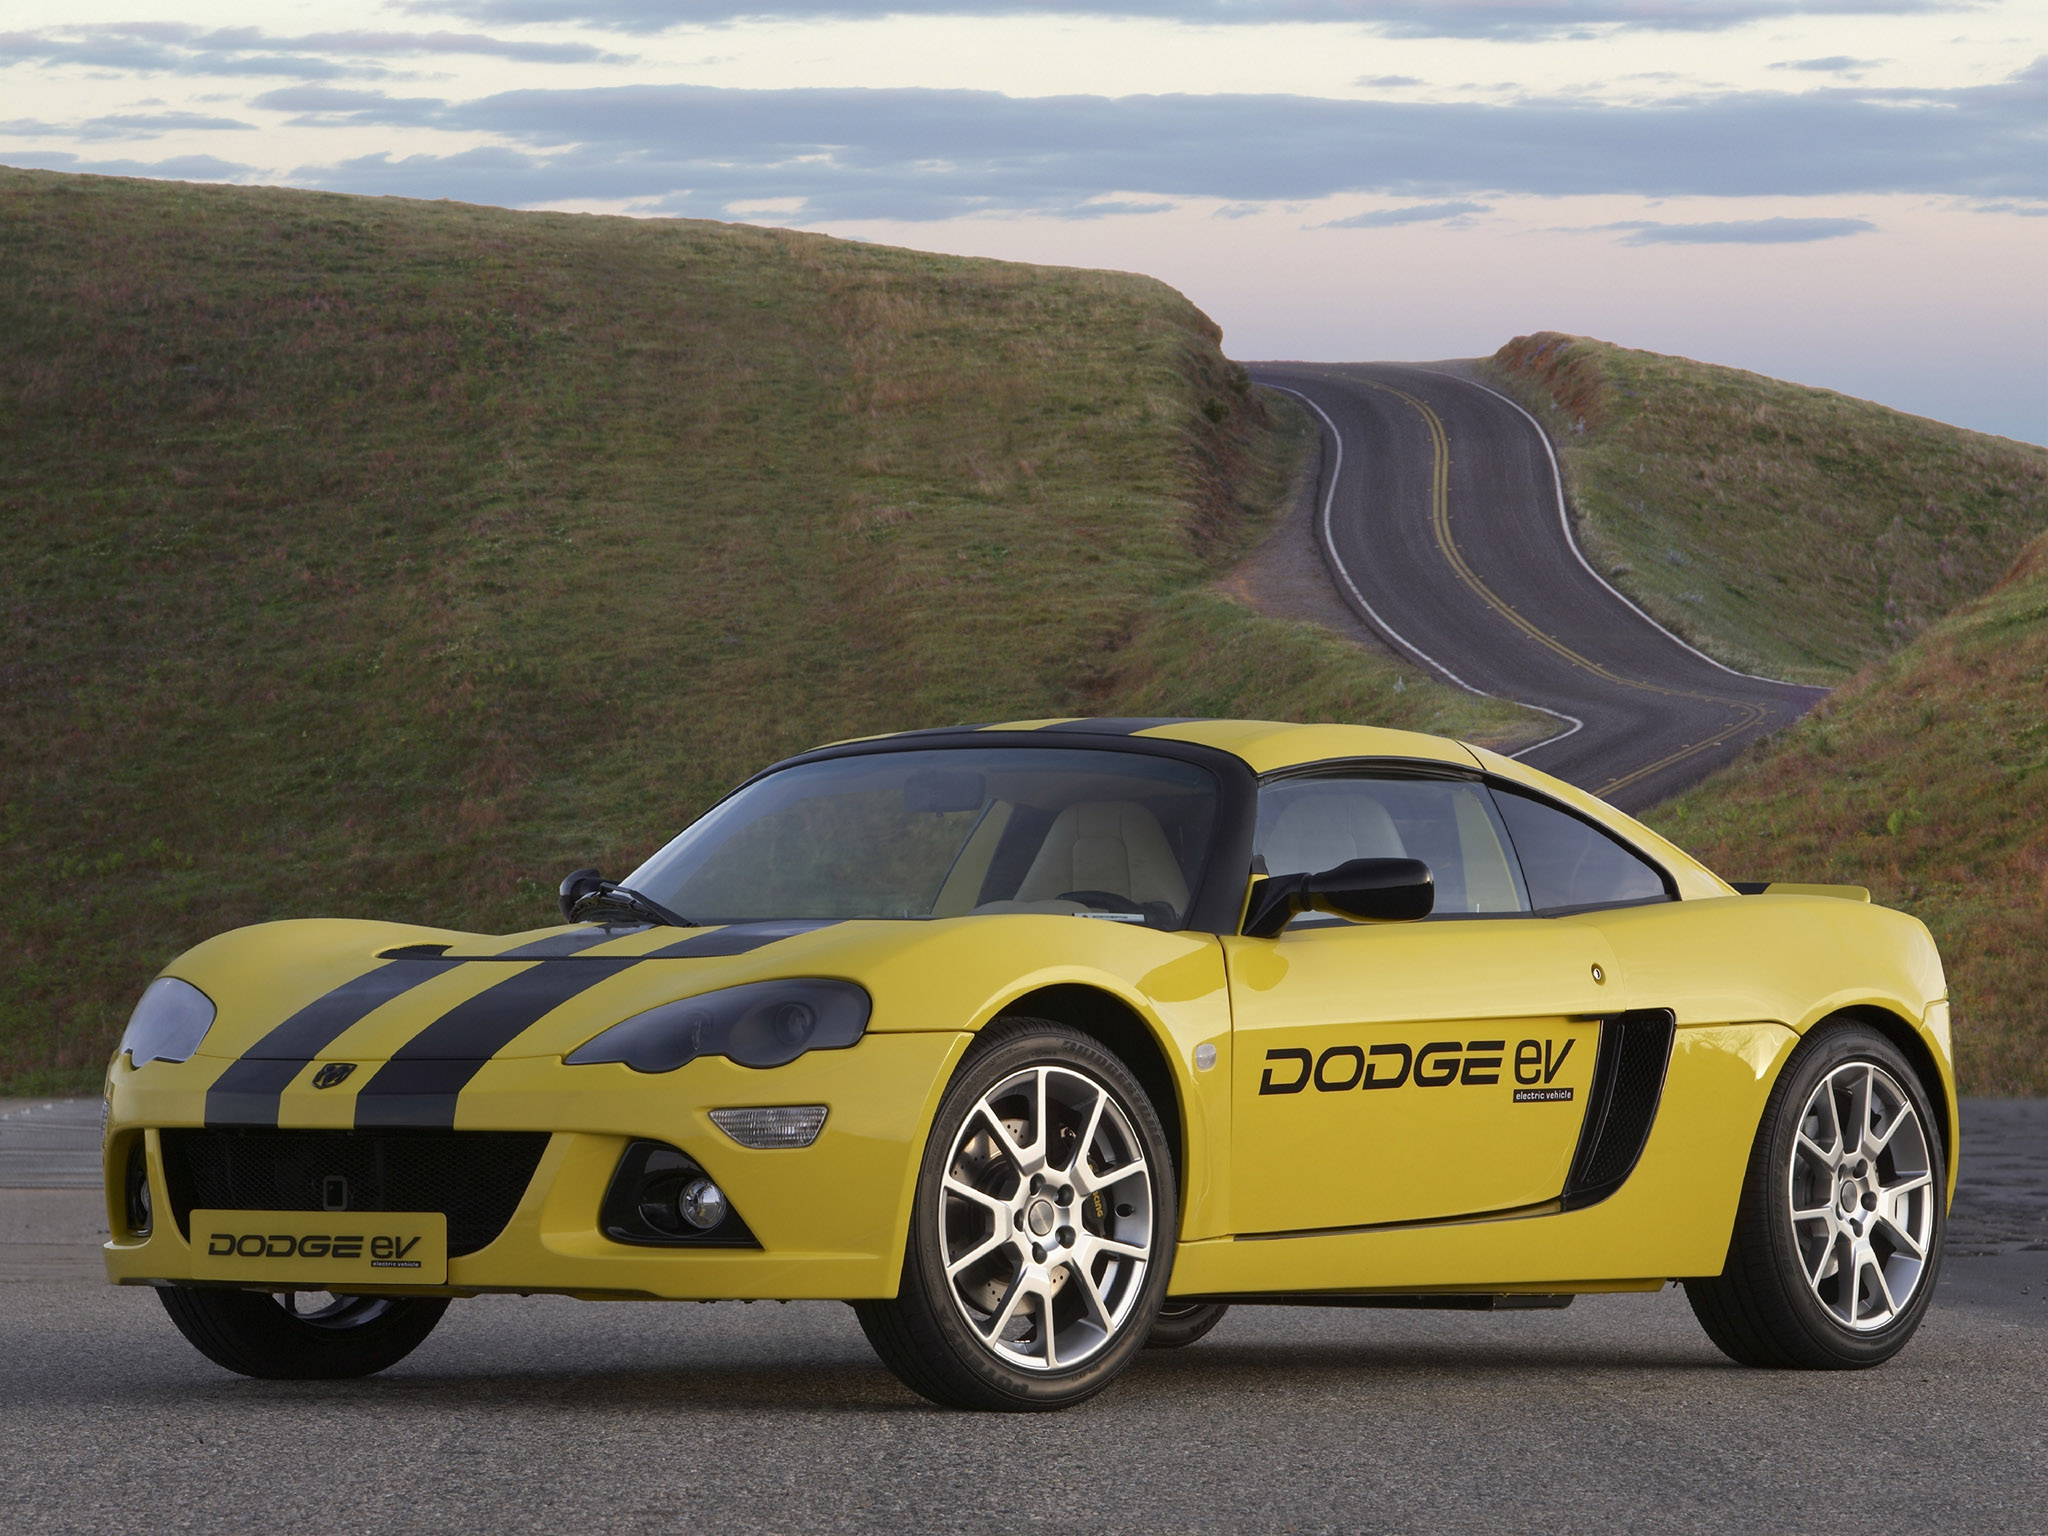 2008, Dodge, Ev, Concept, E v, Sportcar Wallpaper